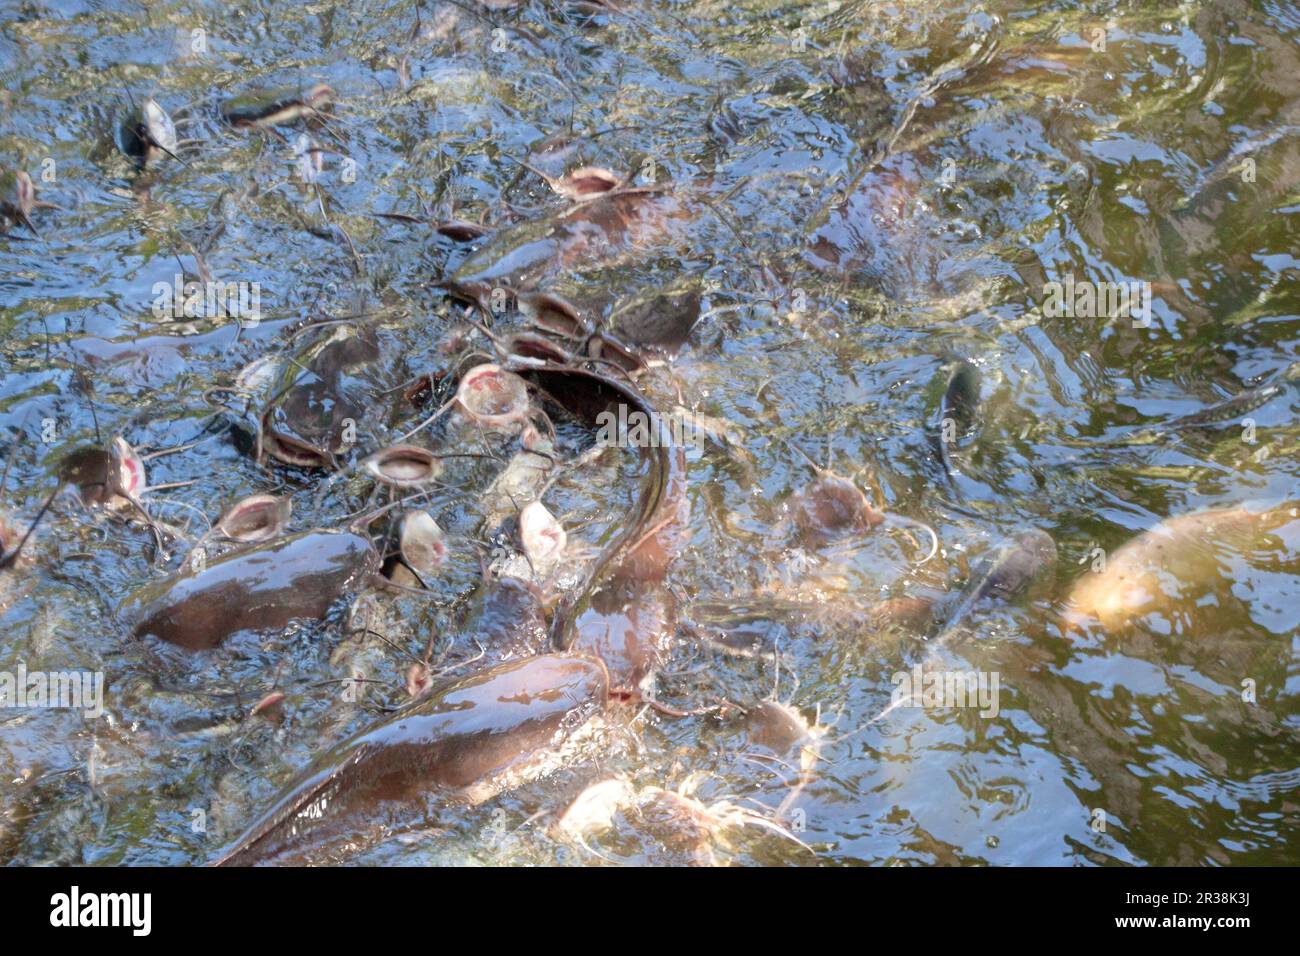 Catfish in pond Stock Photo